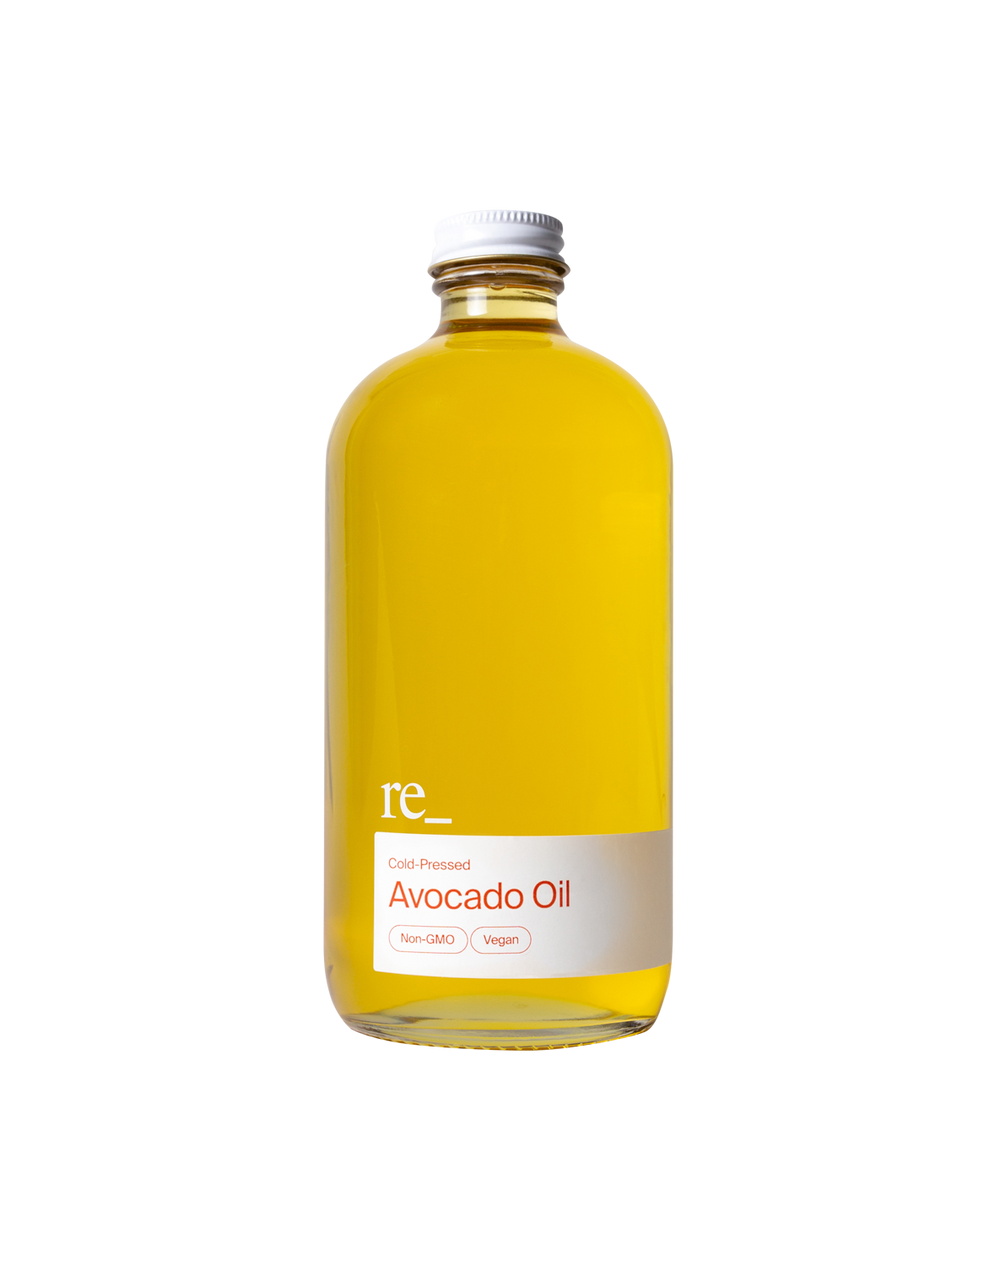 Avocado Oil, Cold-pressed, Bottle re_